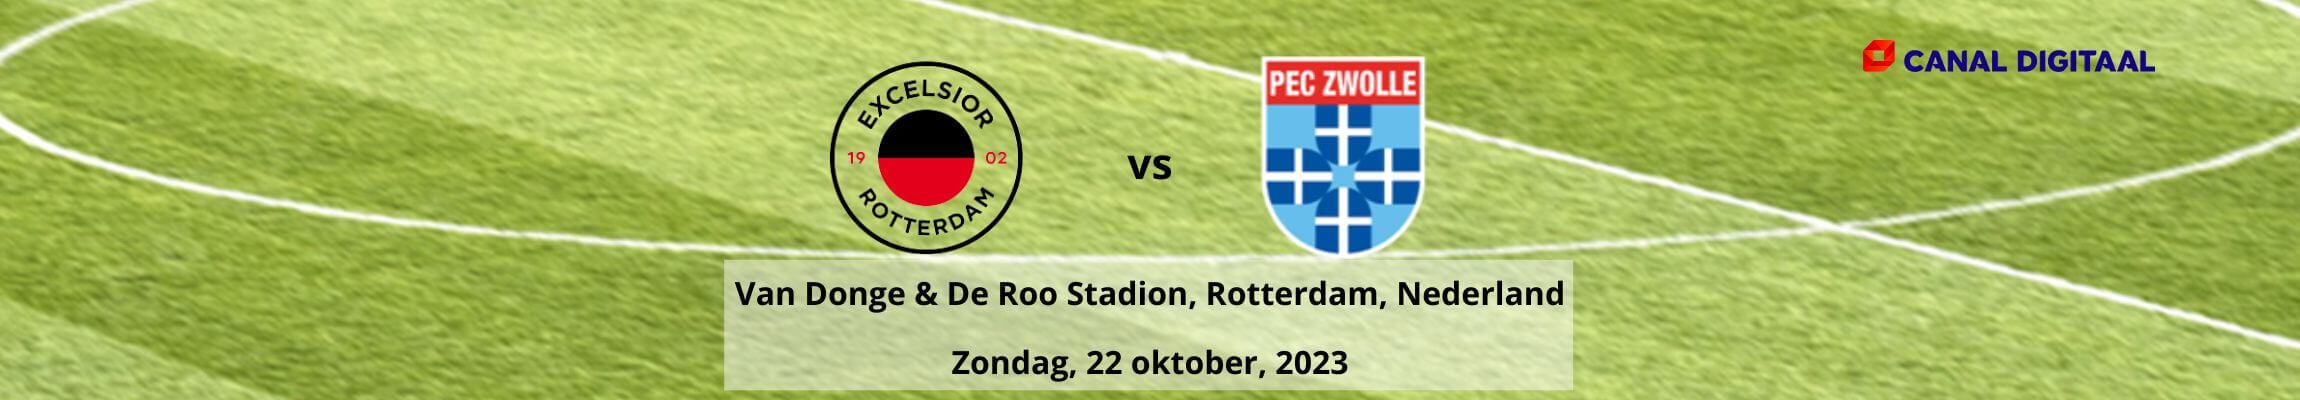 Excelsior vs PEC Zwolle